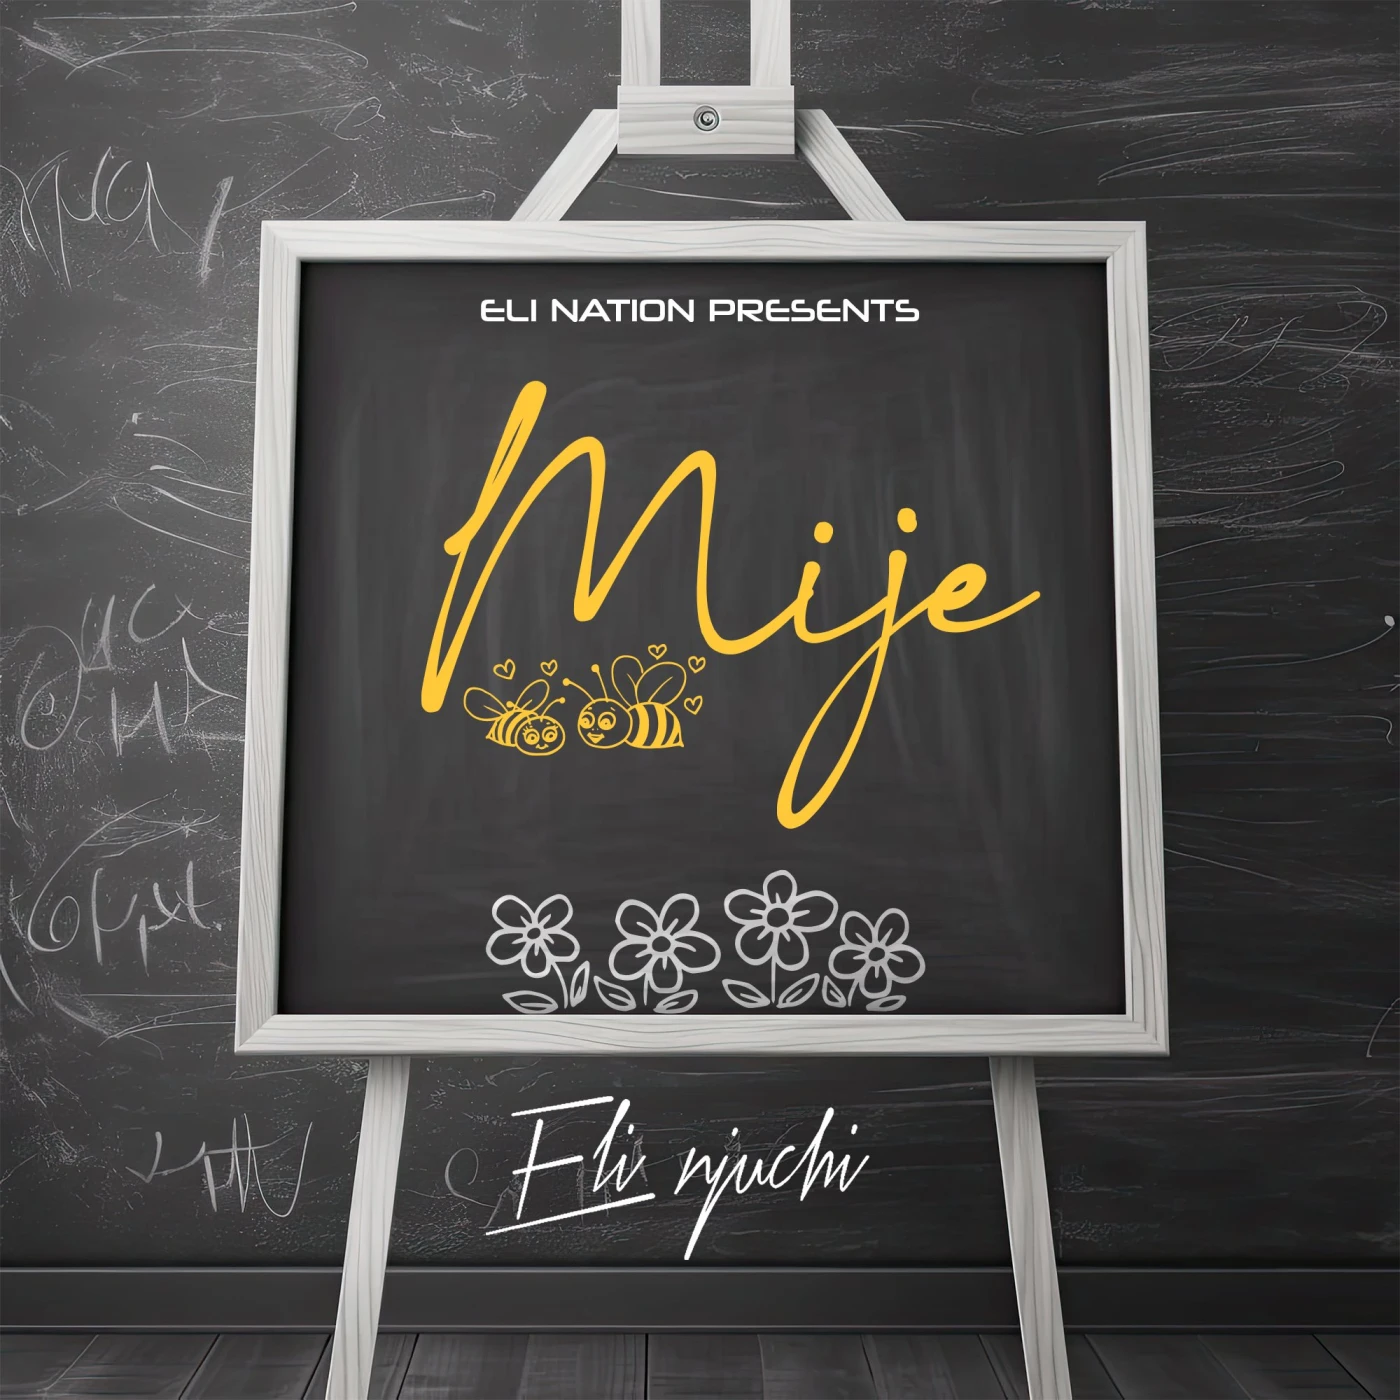 mije-eli-njuchi-Just Malawi Music